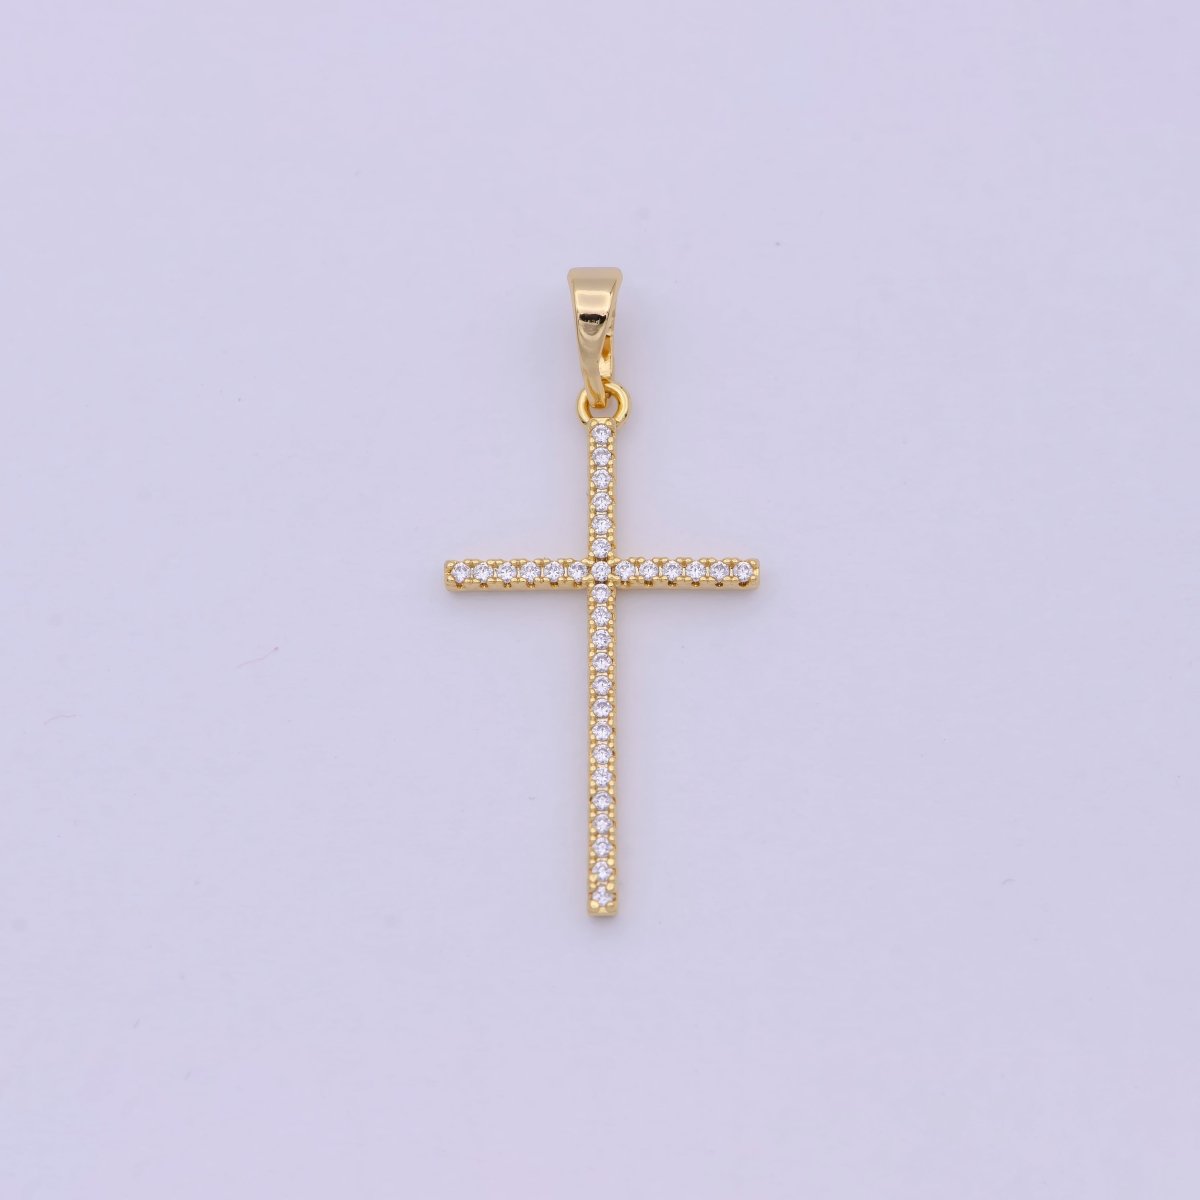 White, 14K Gold Filled Minimalist 34mm Micro Paved CZ Latin Religious Cross Pendant H-018 H-022 H-136 I-010 - DLUXCA